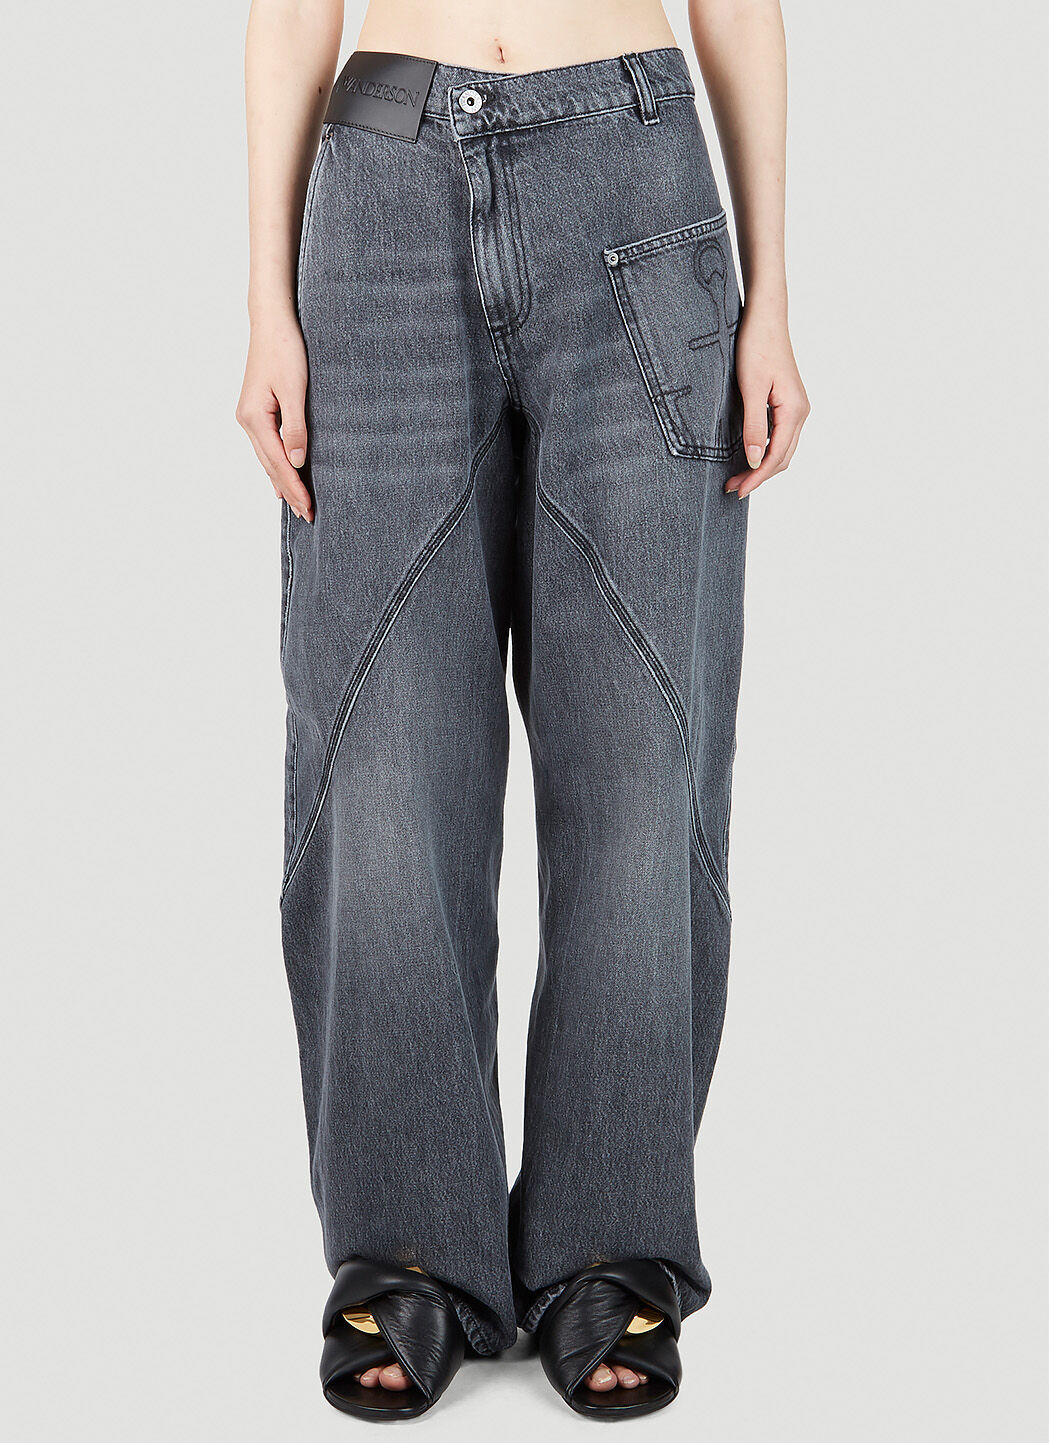 JW Anderson Twisted Workwear Jeans Grey jwa0251017